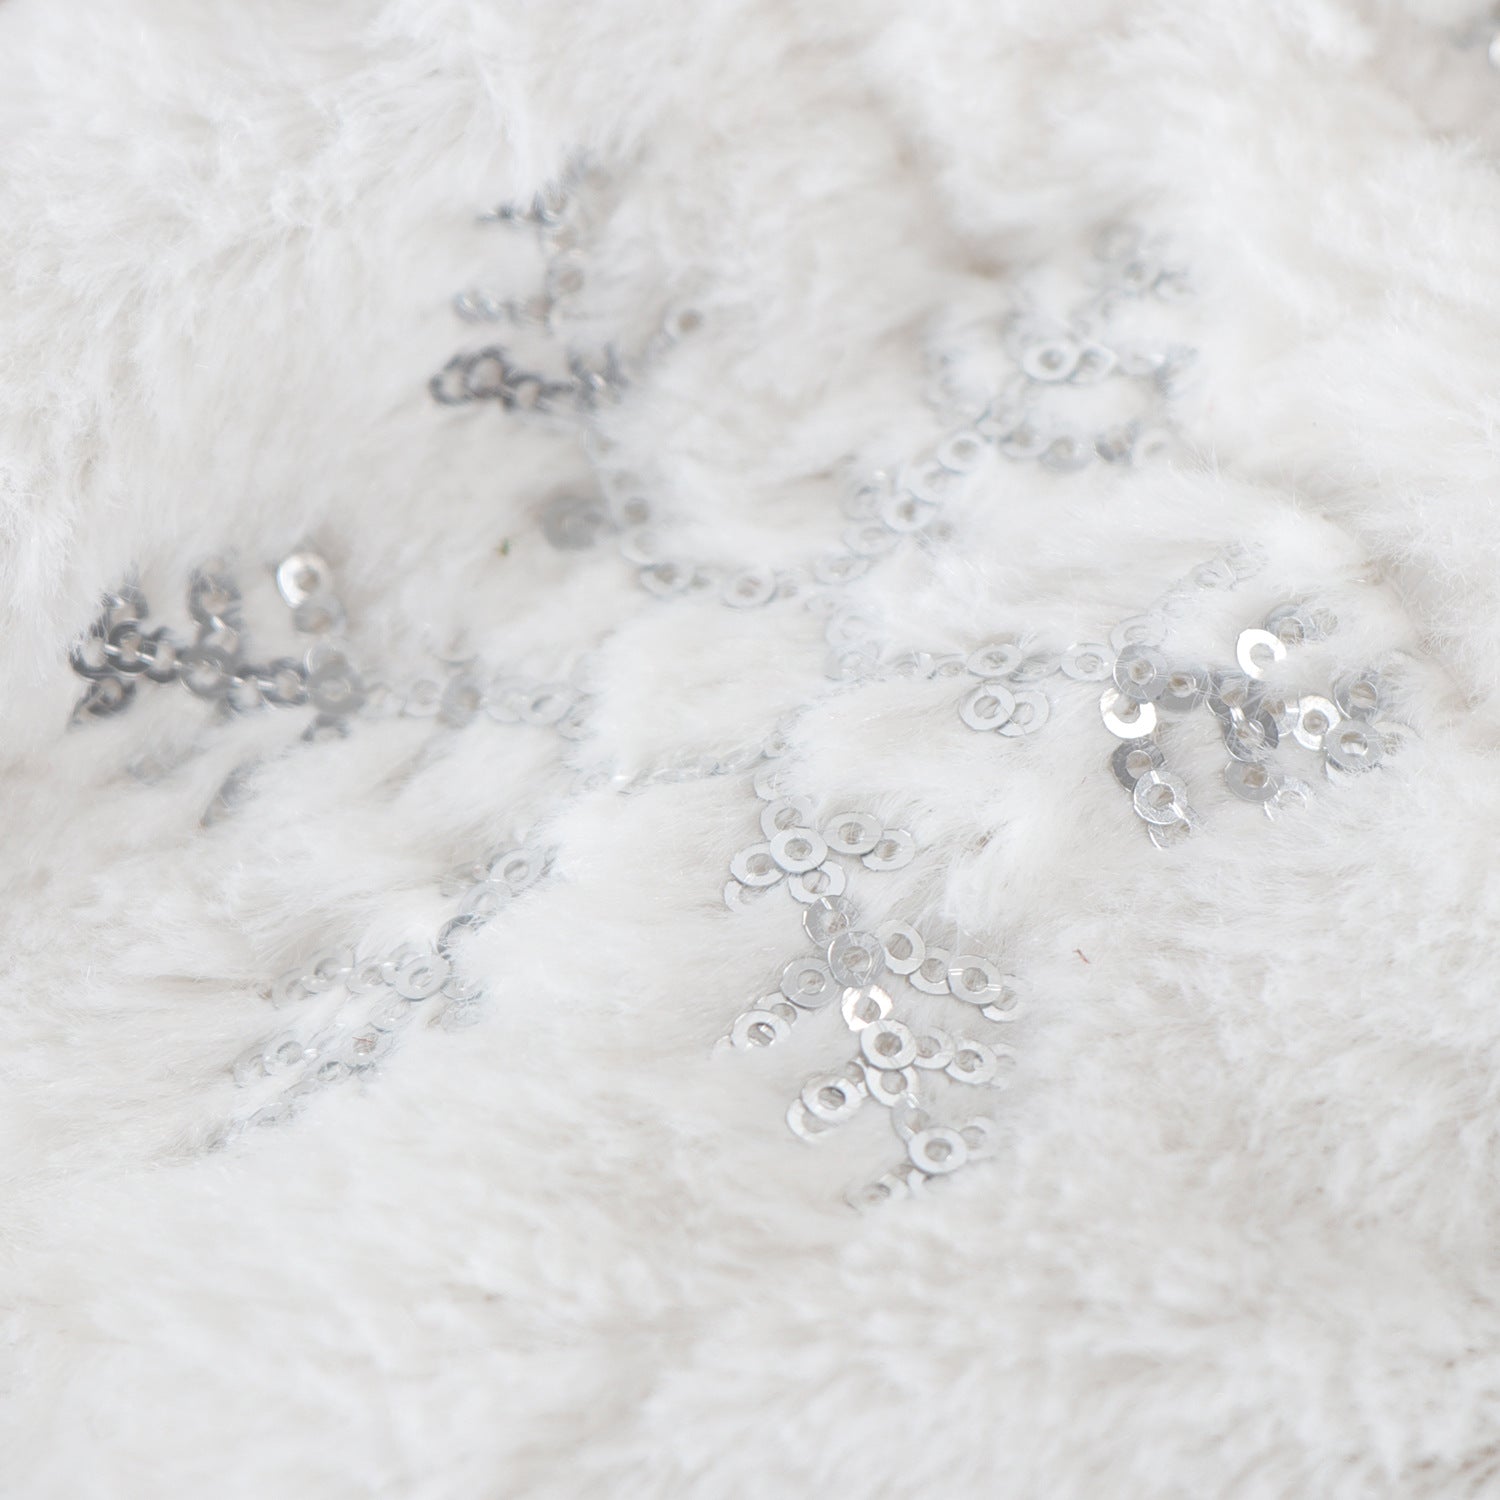 Plush Snowflake Sequins Christmas Bottle Cover